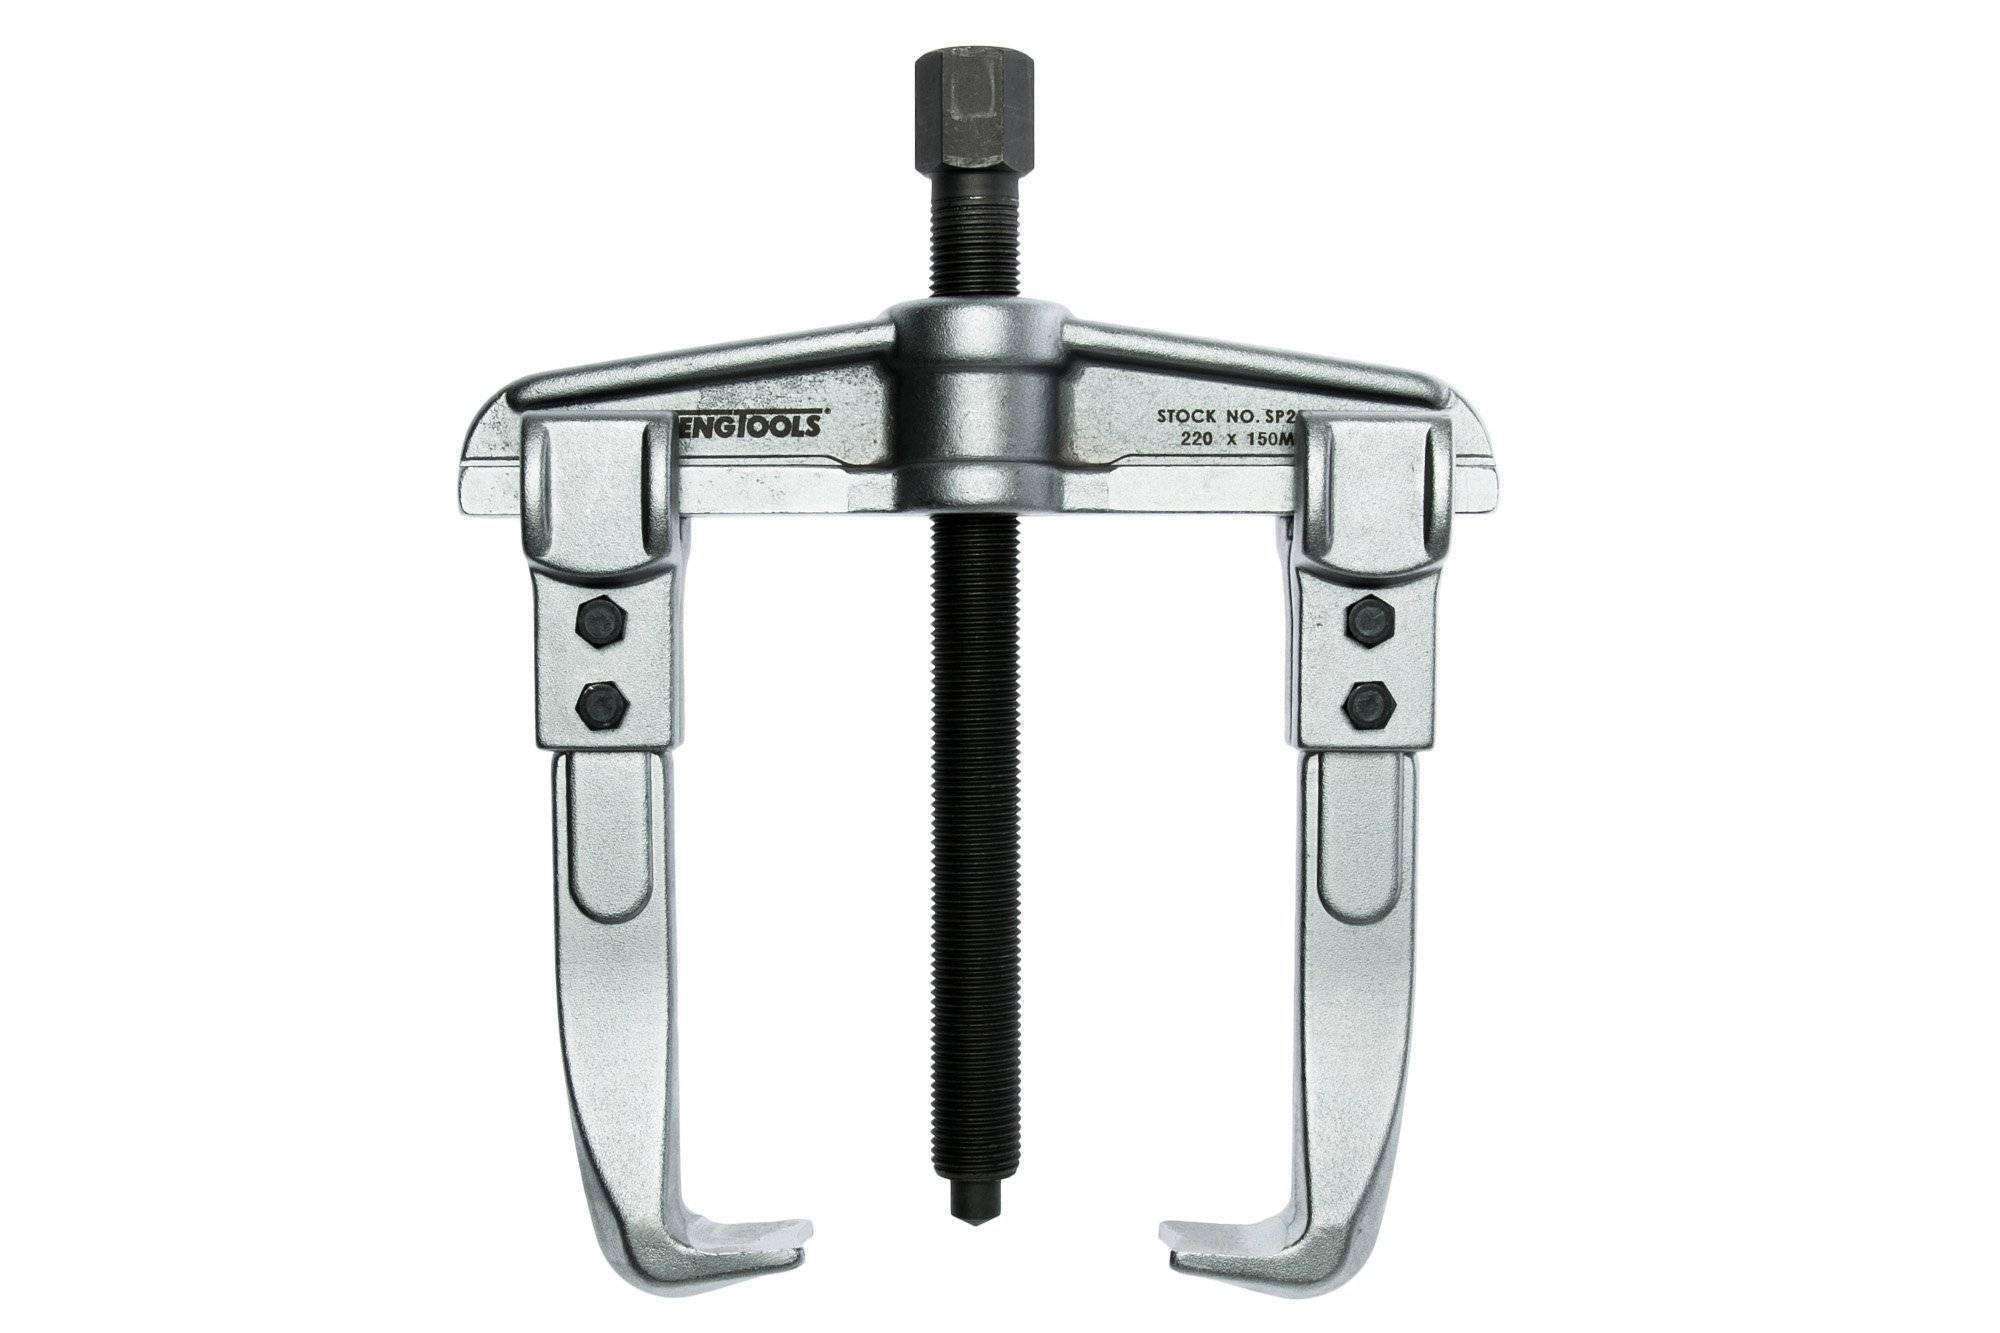 Teng Tools 158mm 2 Arm Internal / External Puller - Gear Removal Tool - SP2215